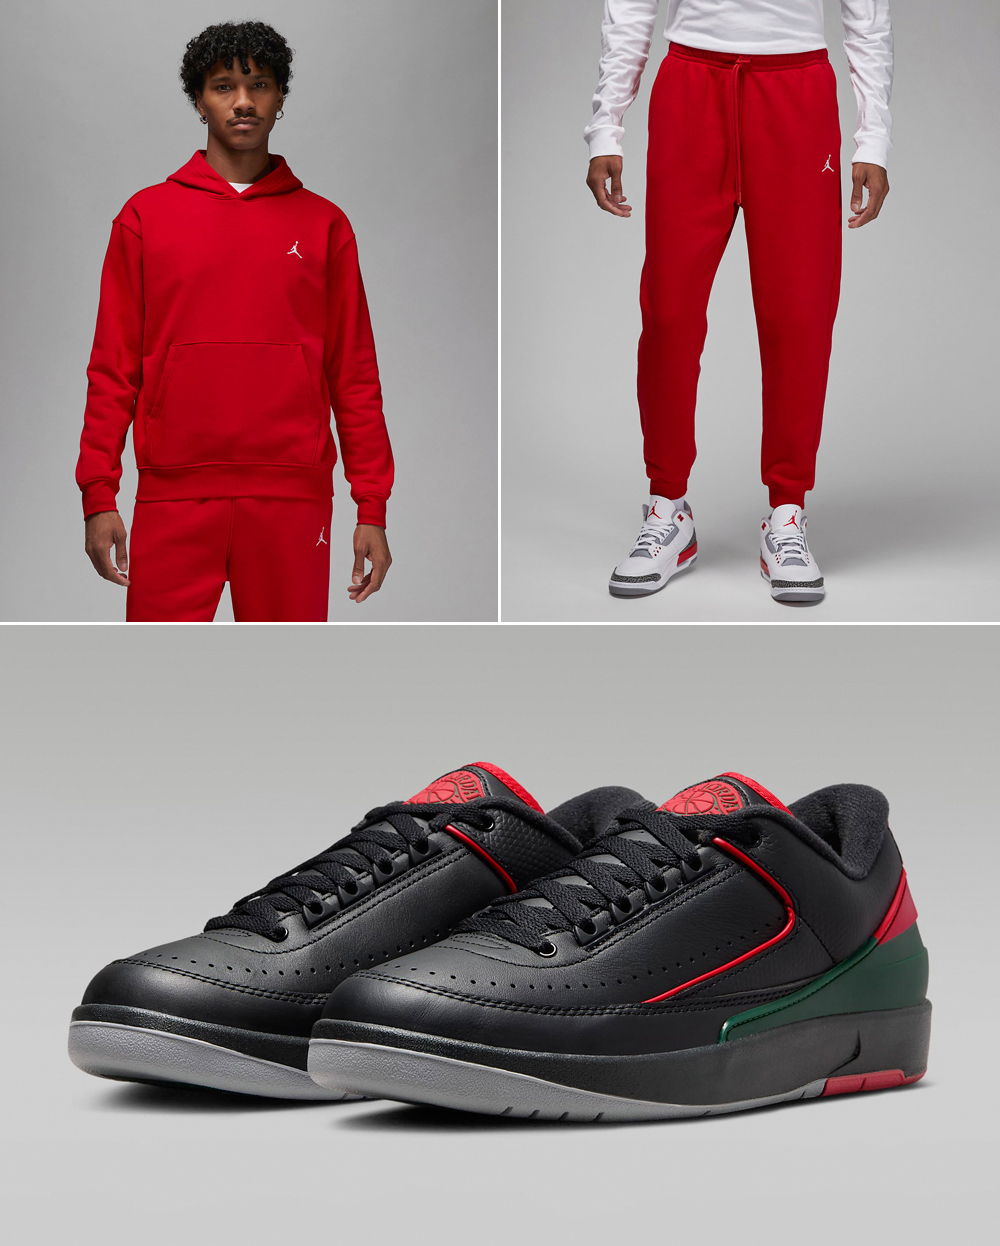 Air-Jordan-2-Low-Christmas-Hoodie-Pants-Outfit-Match